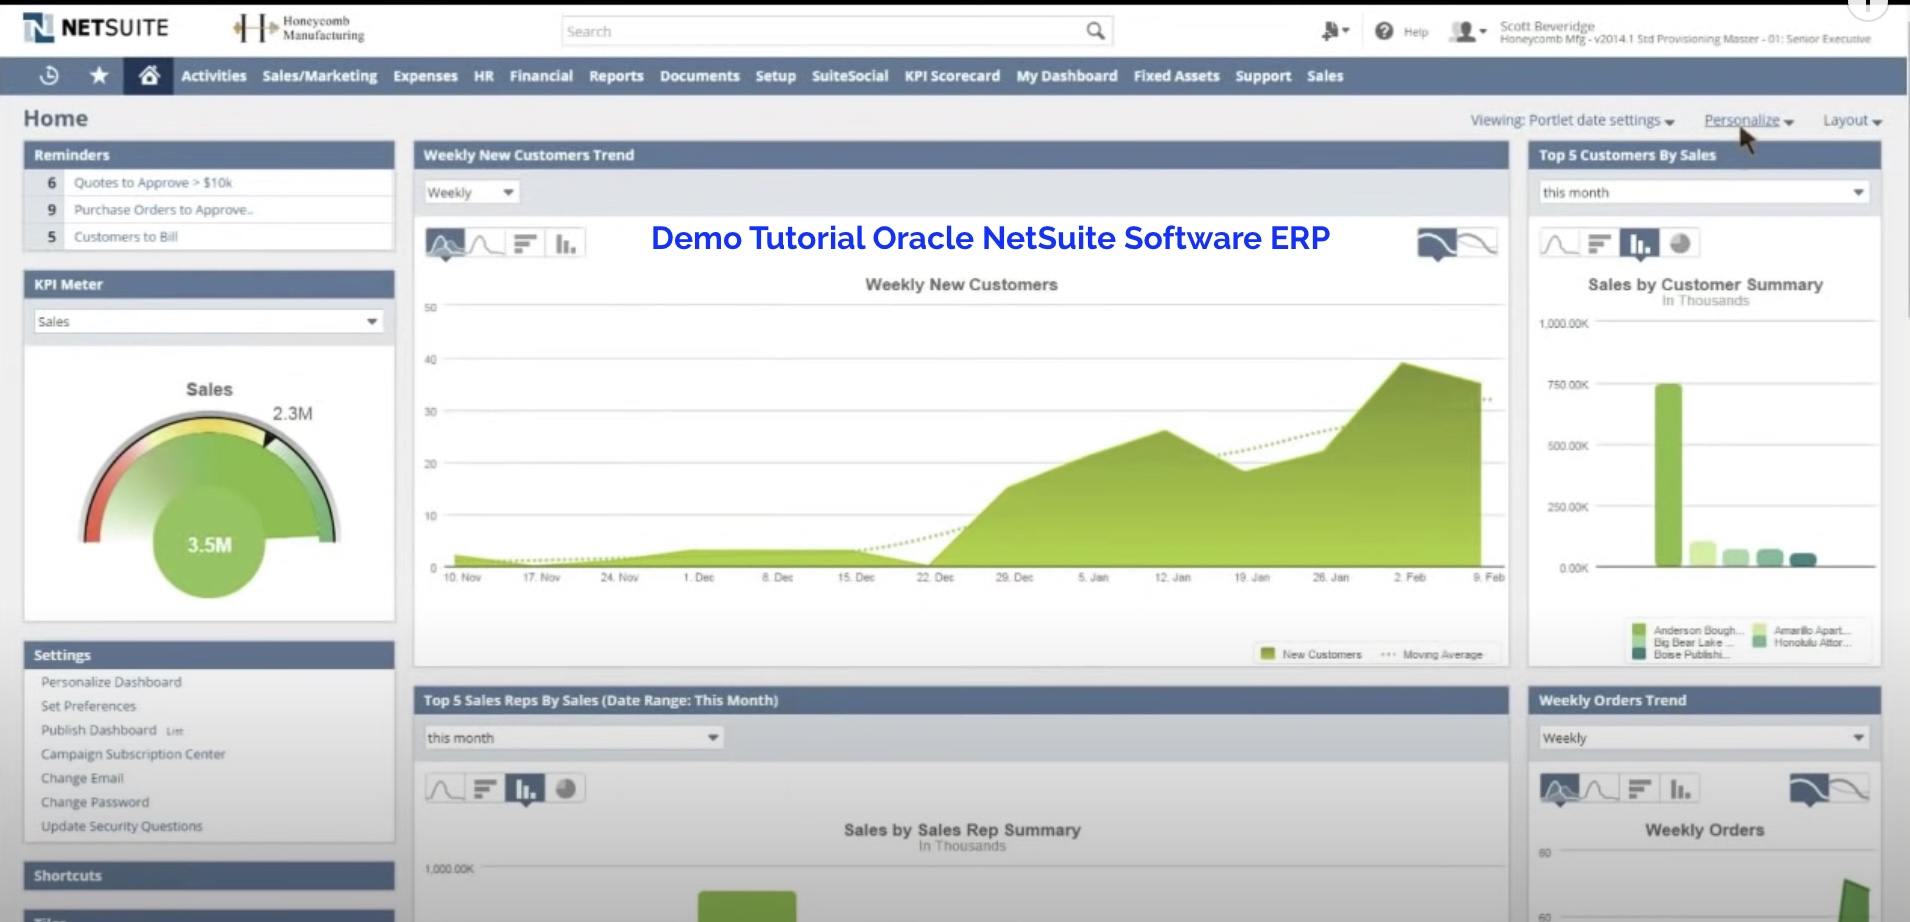 Demo Tutorial Oracle NetSuite Software ERP